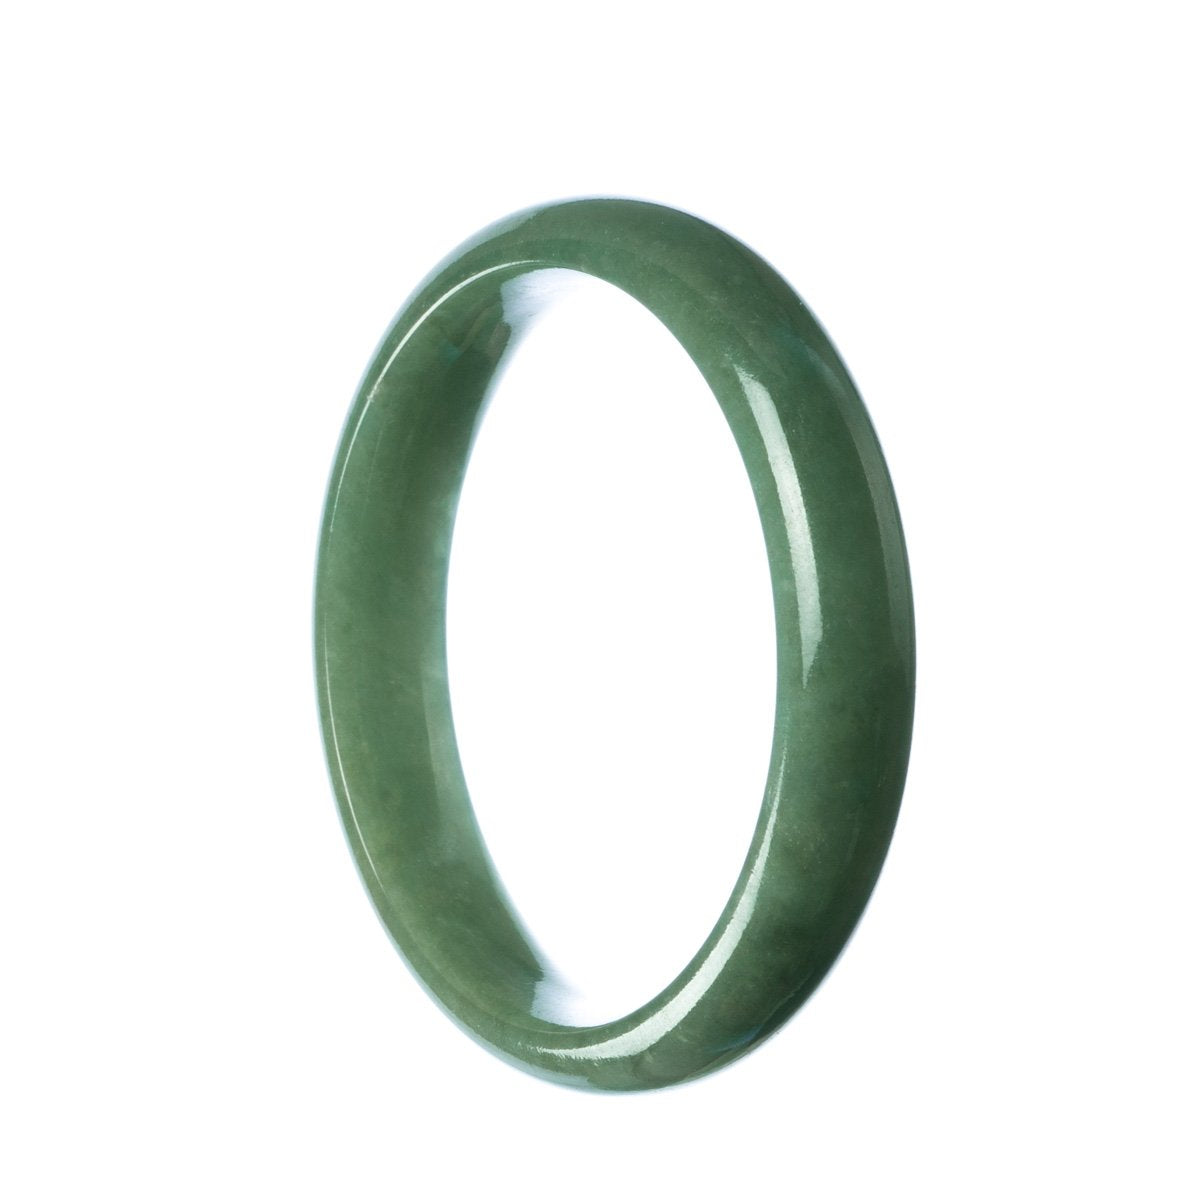 A green Burma jade bracelet with a half moon design, measuring 57mm.